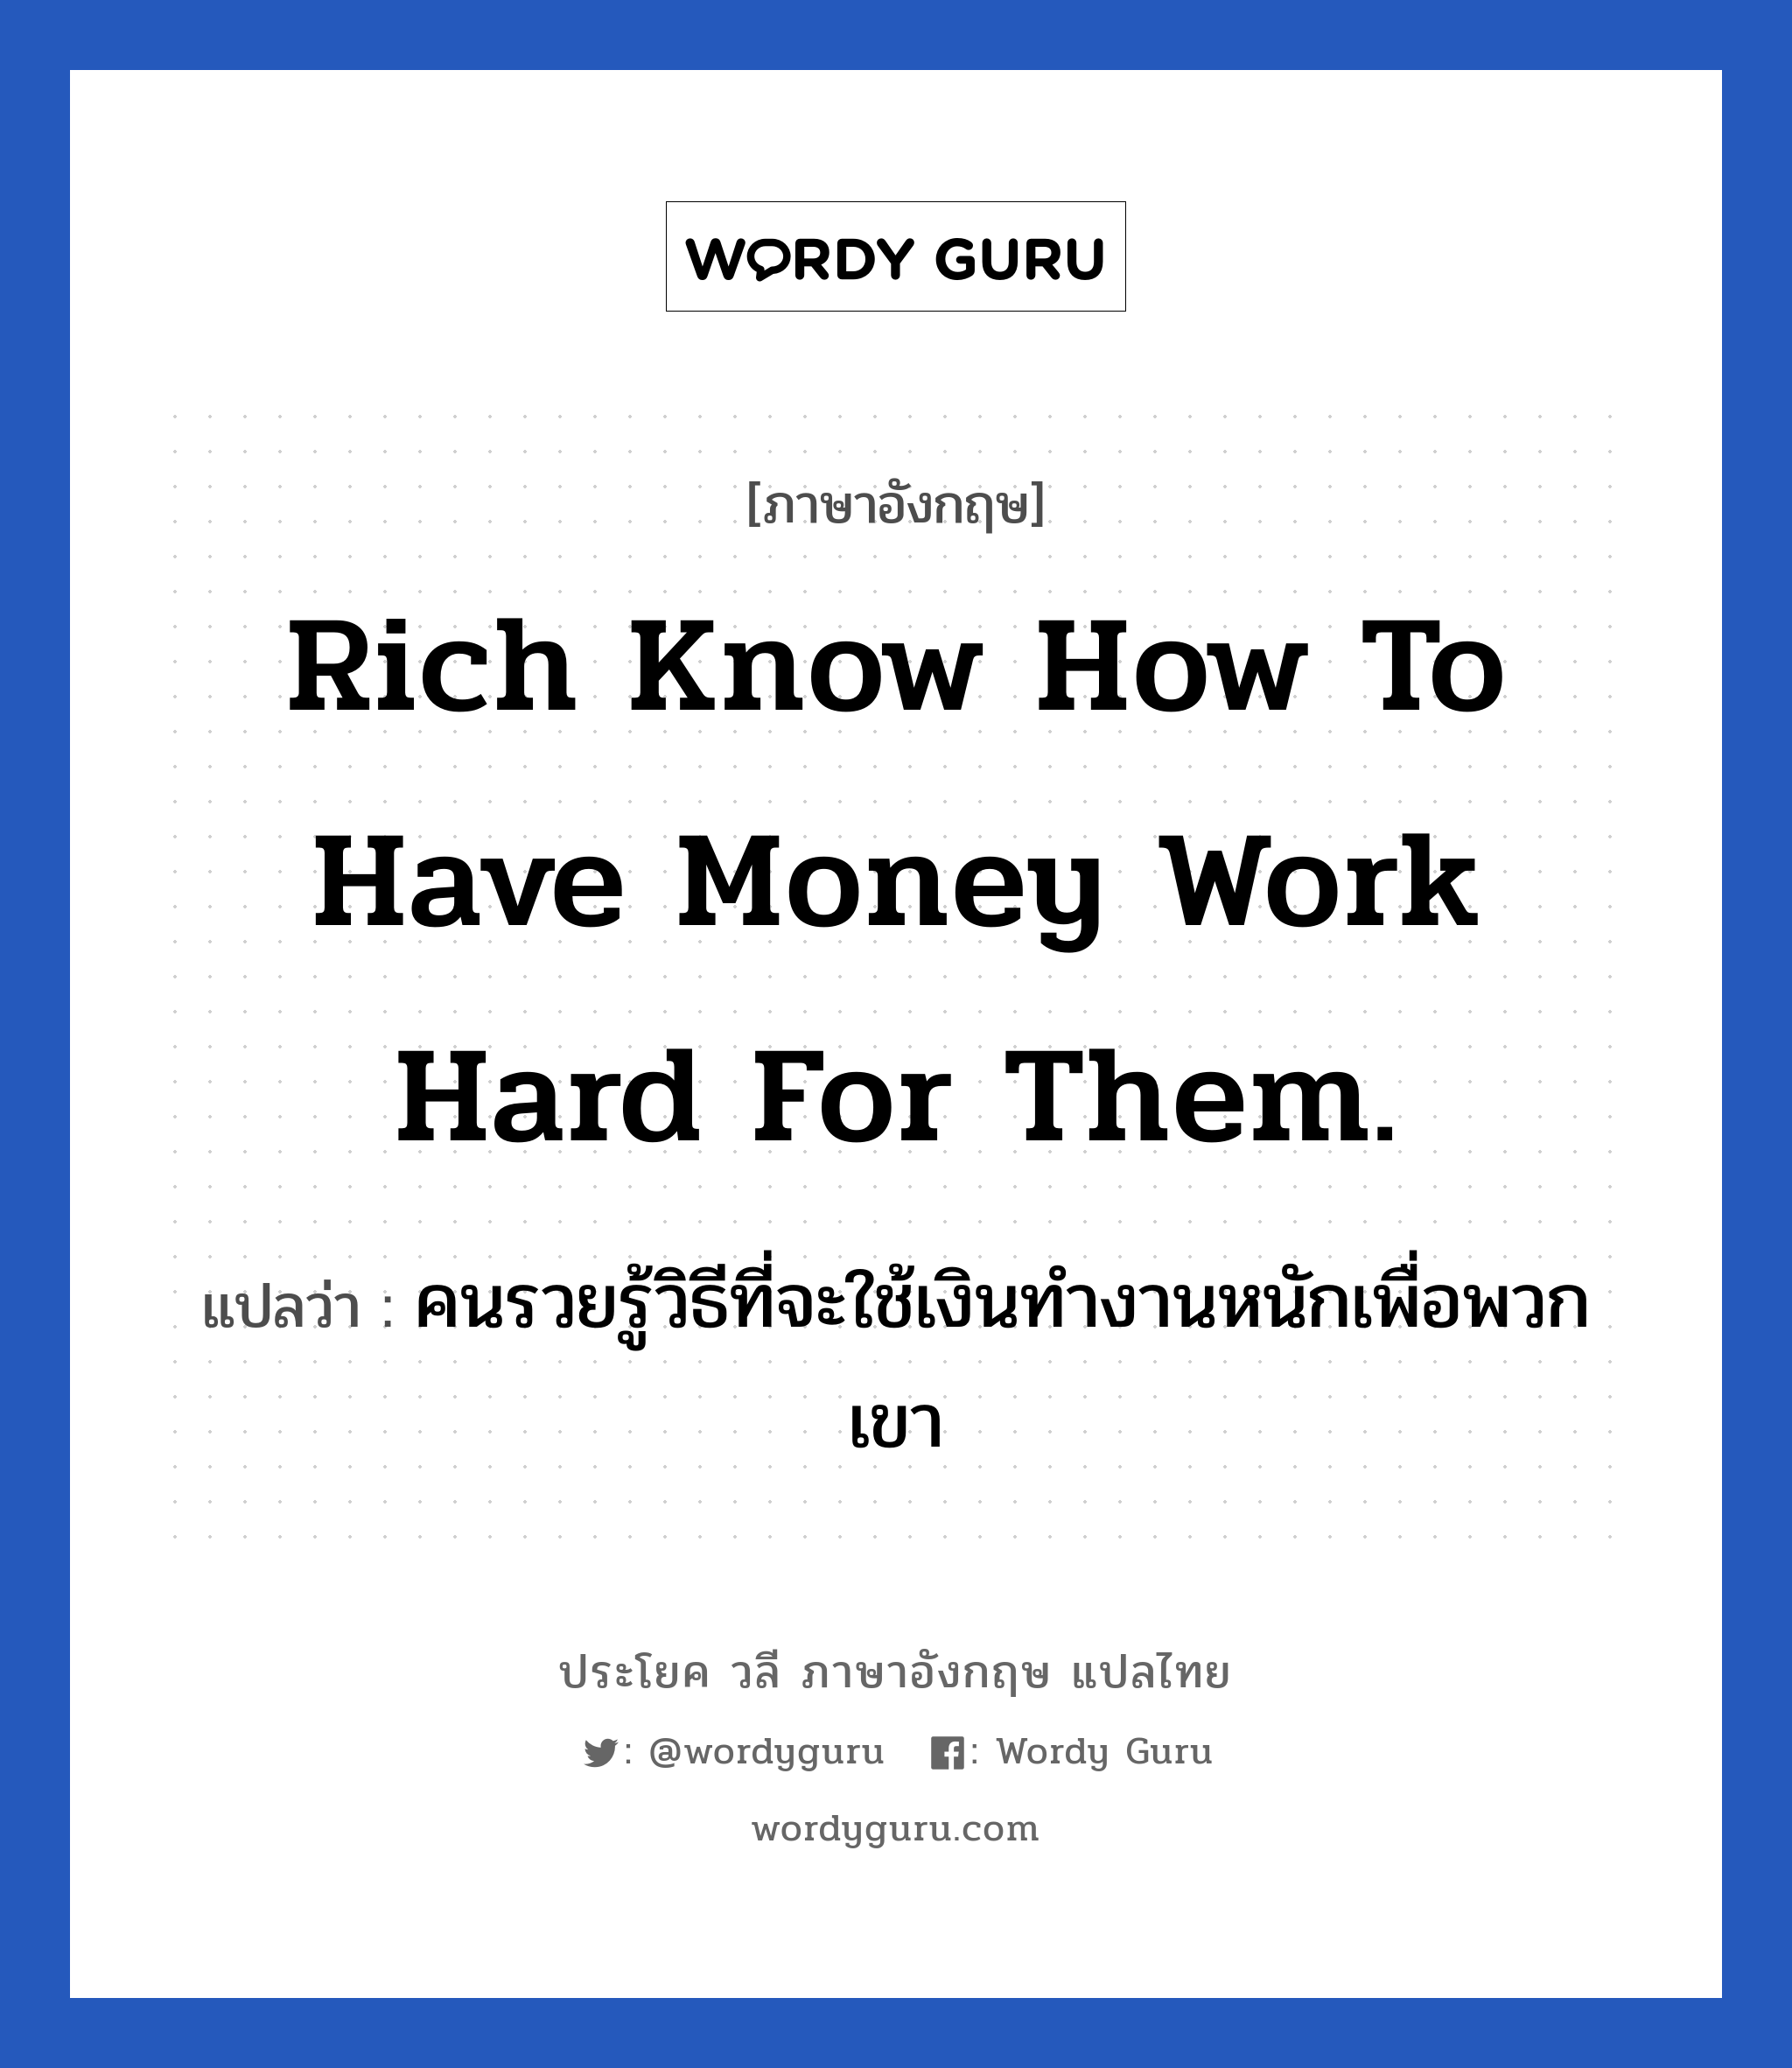 Rich know how to have money work hard for them. แปลว่า? เป็นประโยคในกลุ่มประเภท ในที่ทำงาน, วลีภาษาอังกฤษ Rich know how to have money work hard for them. แปลว่า คนรวยรู้วิธีที่จะใช้เงินทำงานหนักเพื่อพวกเขา หมวด ในที่ทำงาน